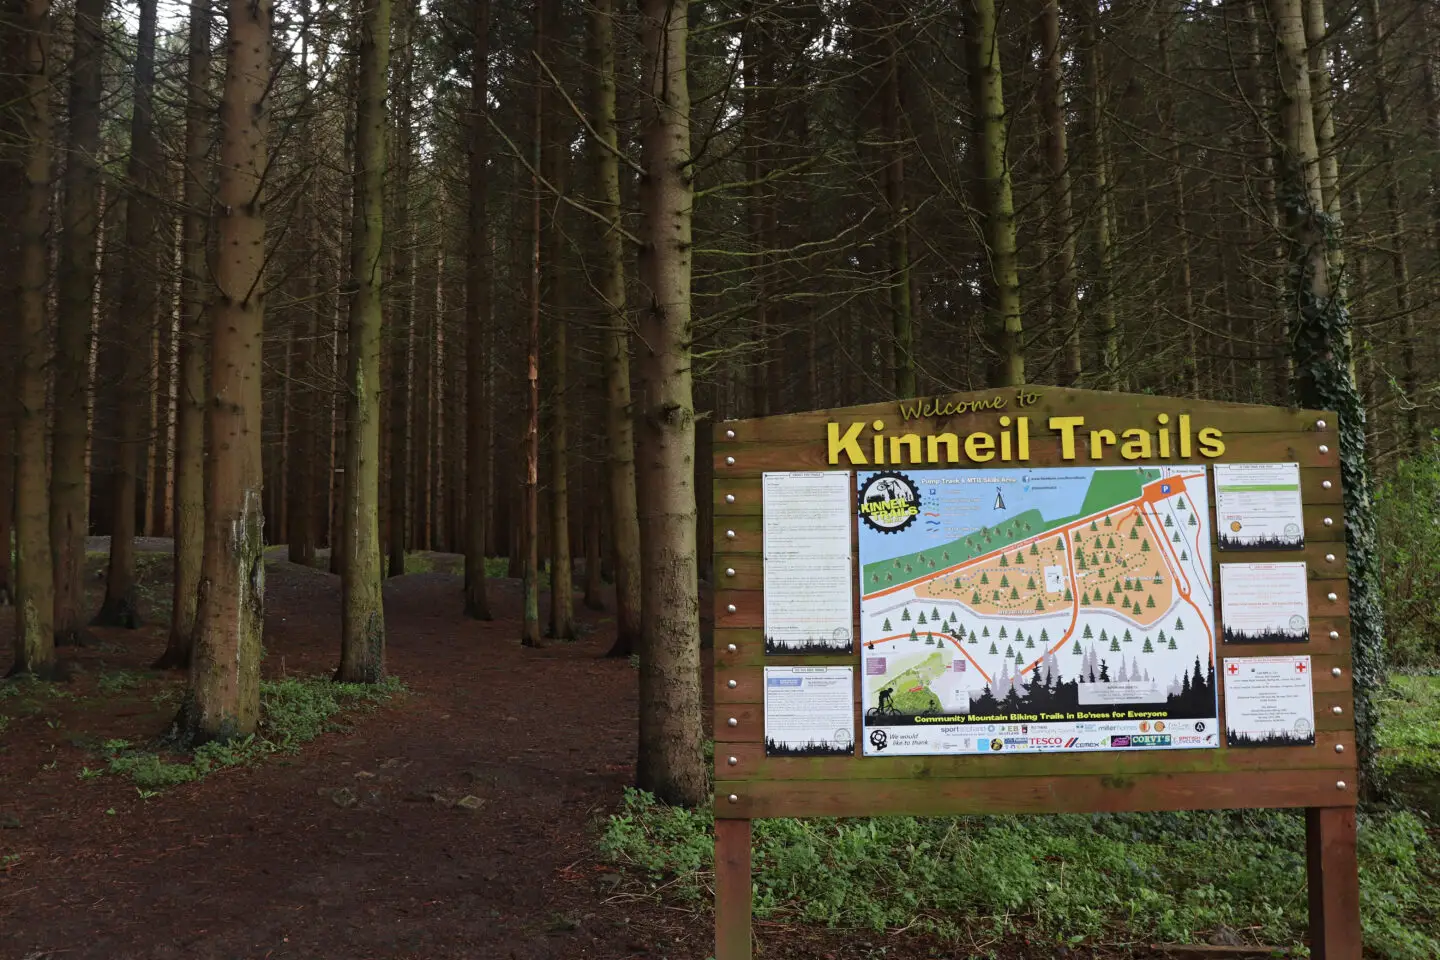 Kinneil bike trails sign in the woods